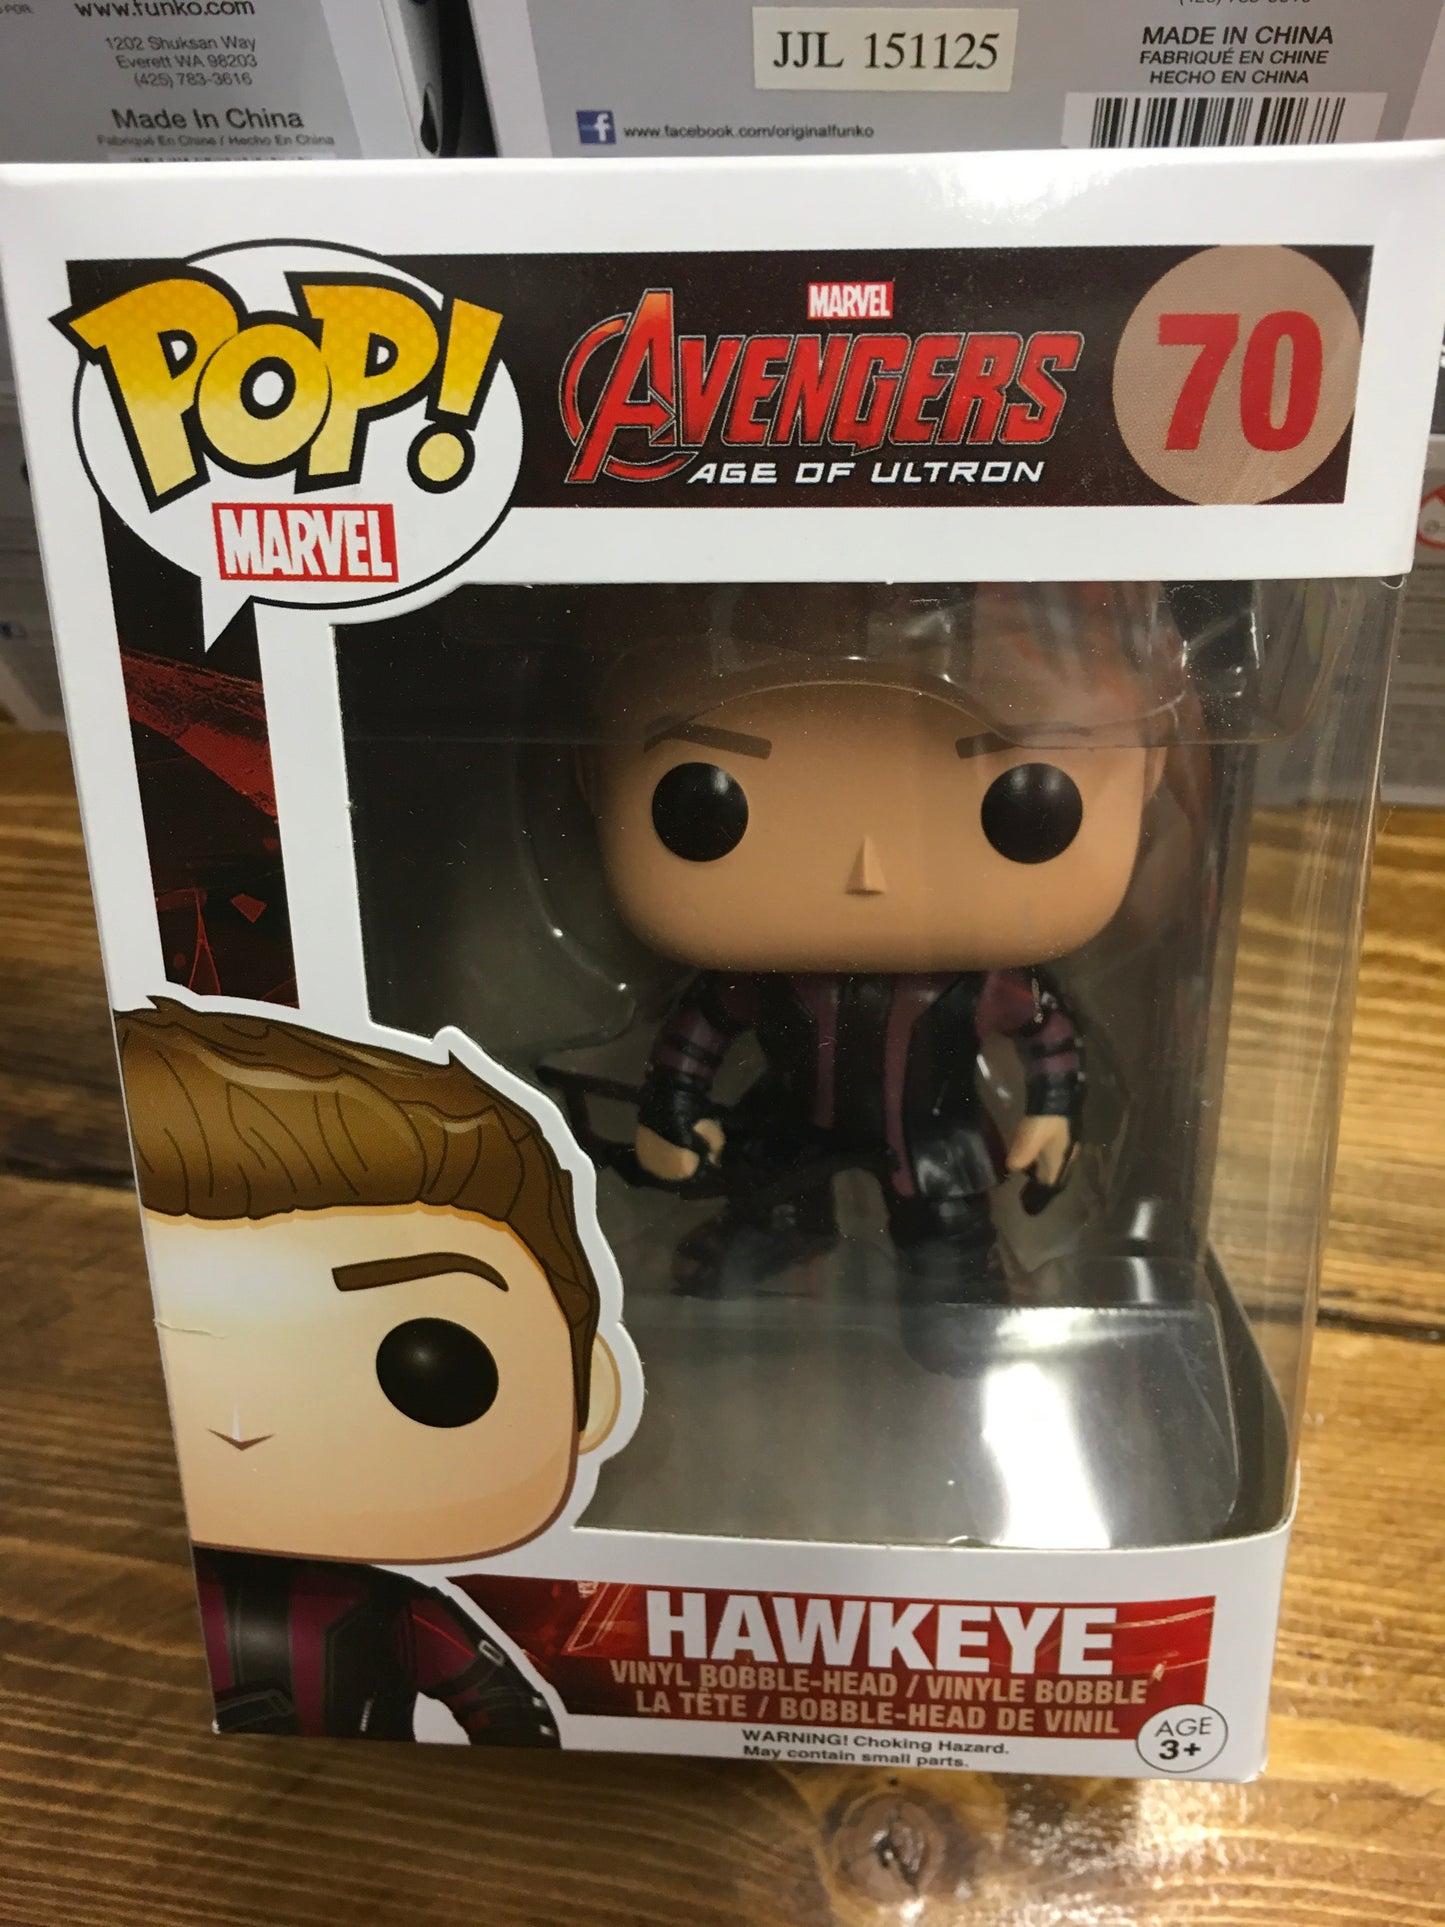 Avengers 2 Hawkeye 70 Funko Pop! Vinyl figure marvel